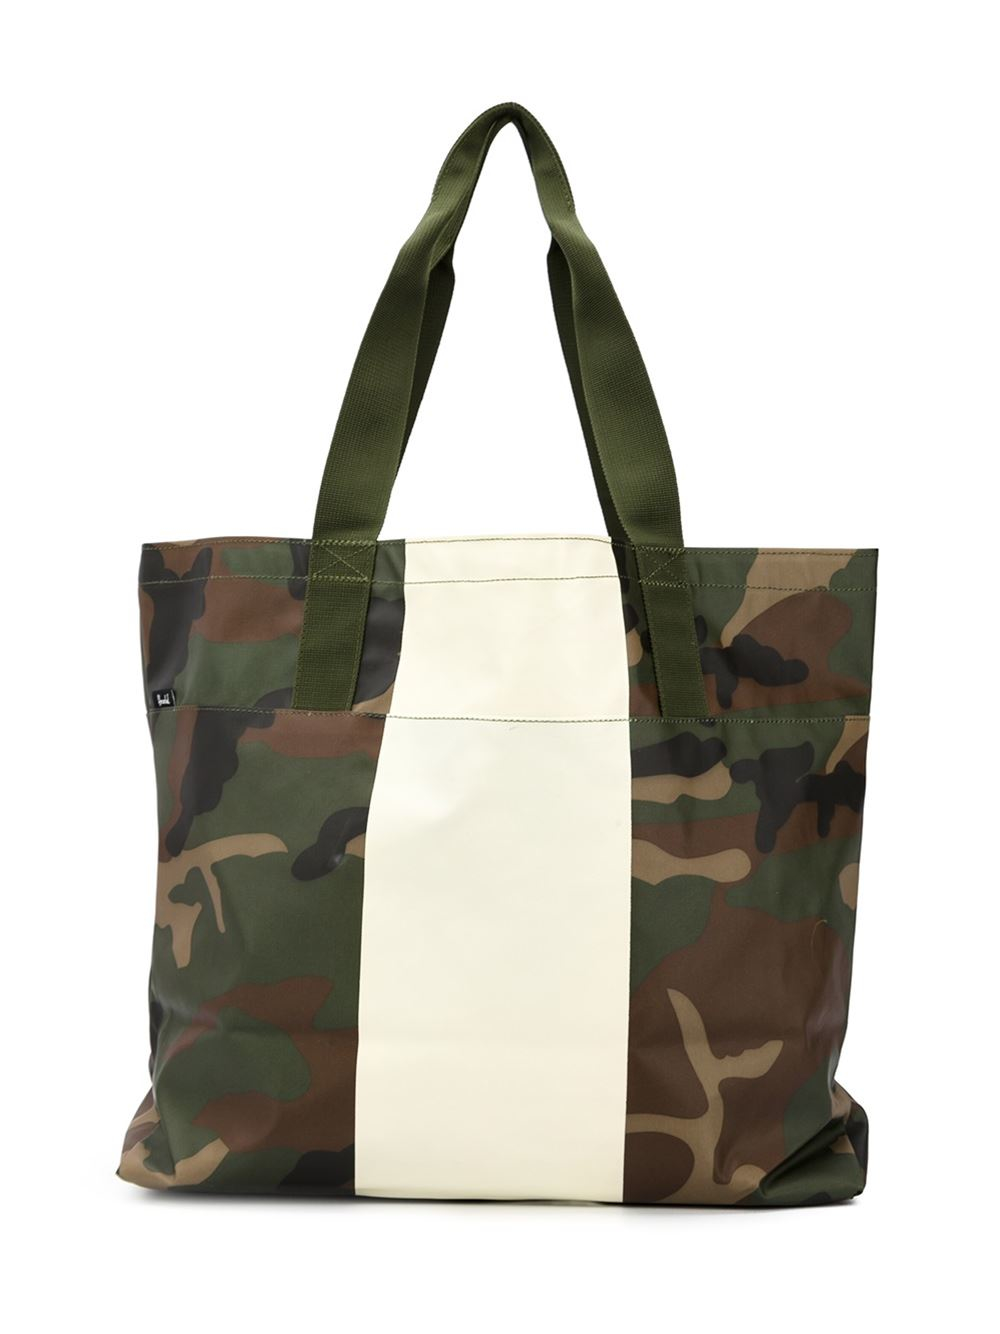 Herschel supply co. 'alexander' Camouflage Tote Bag in Natural | Lyst